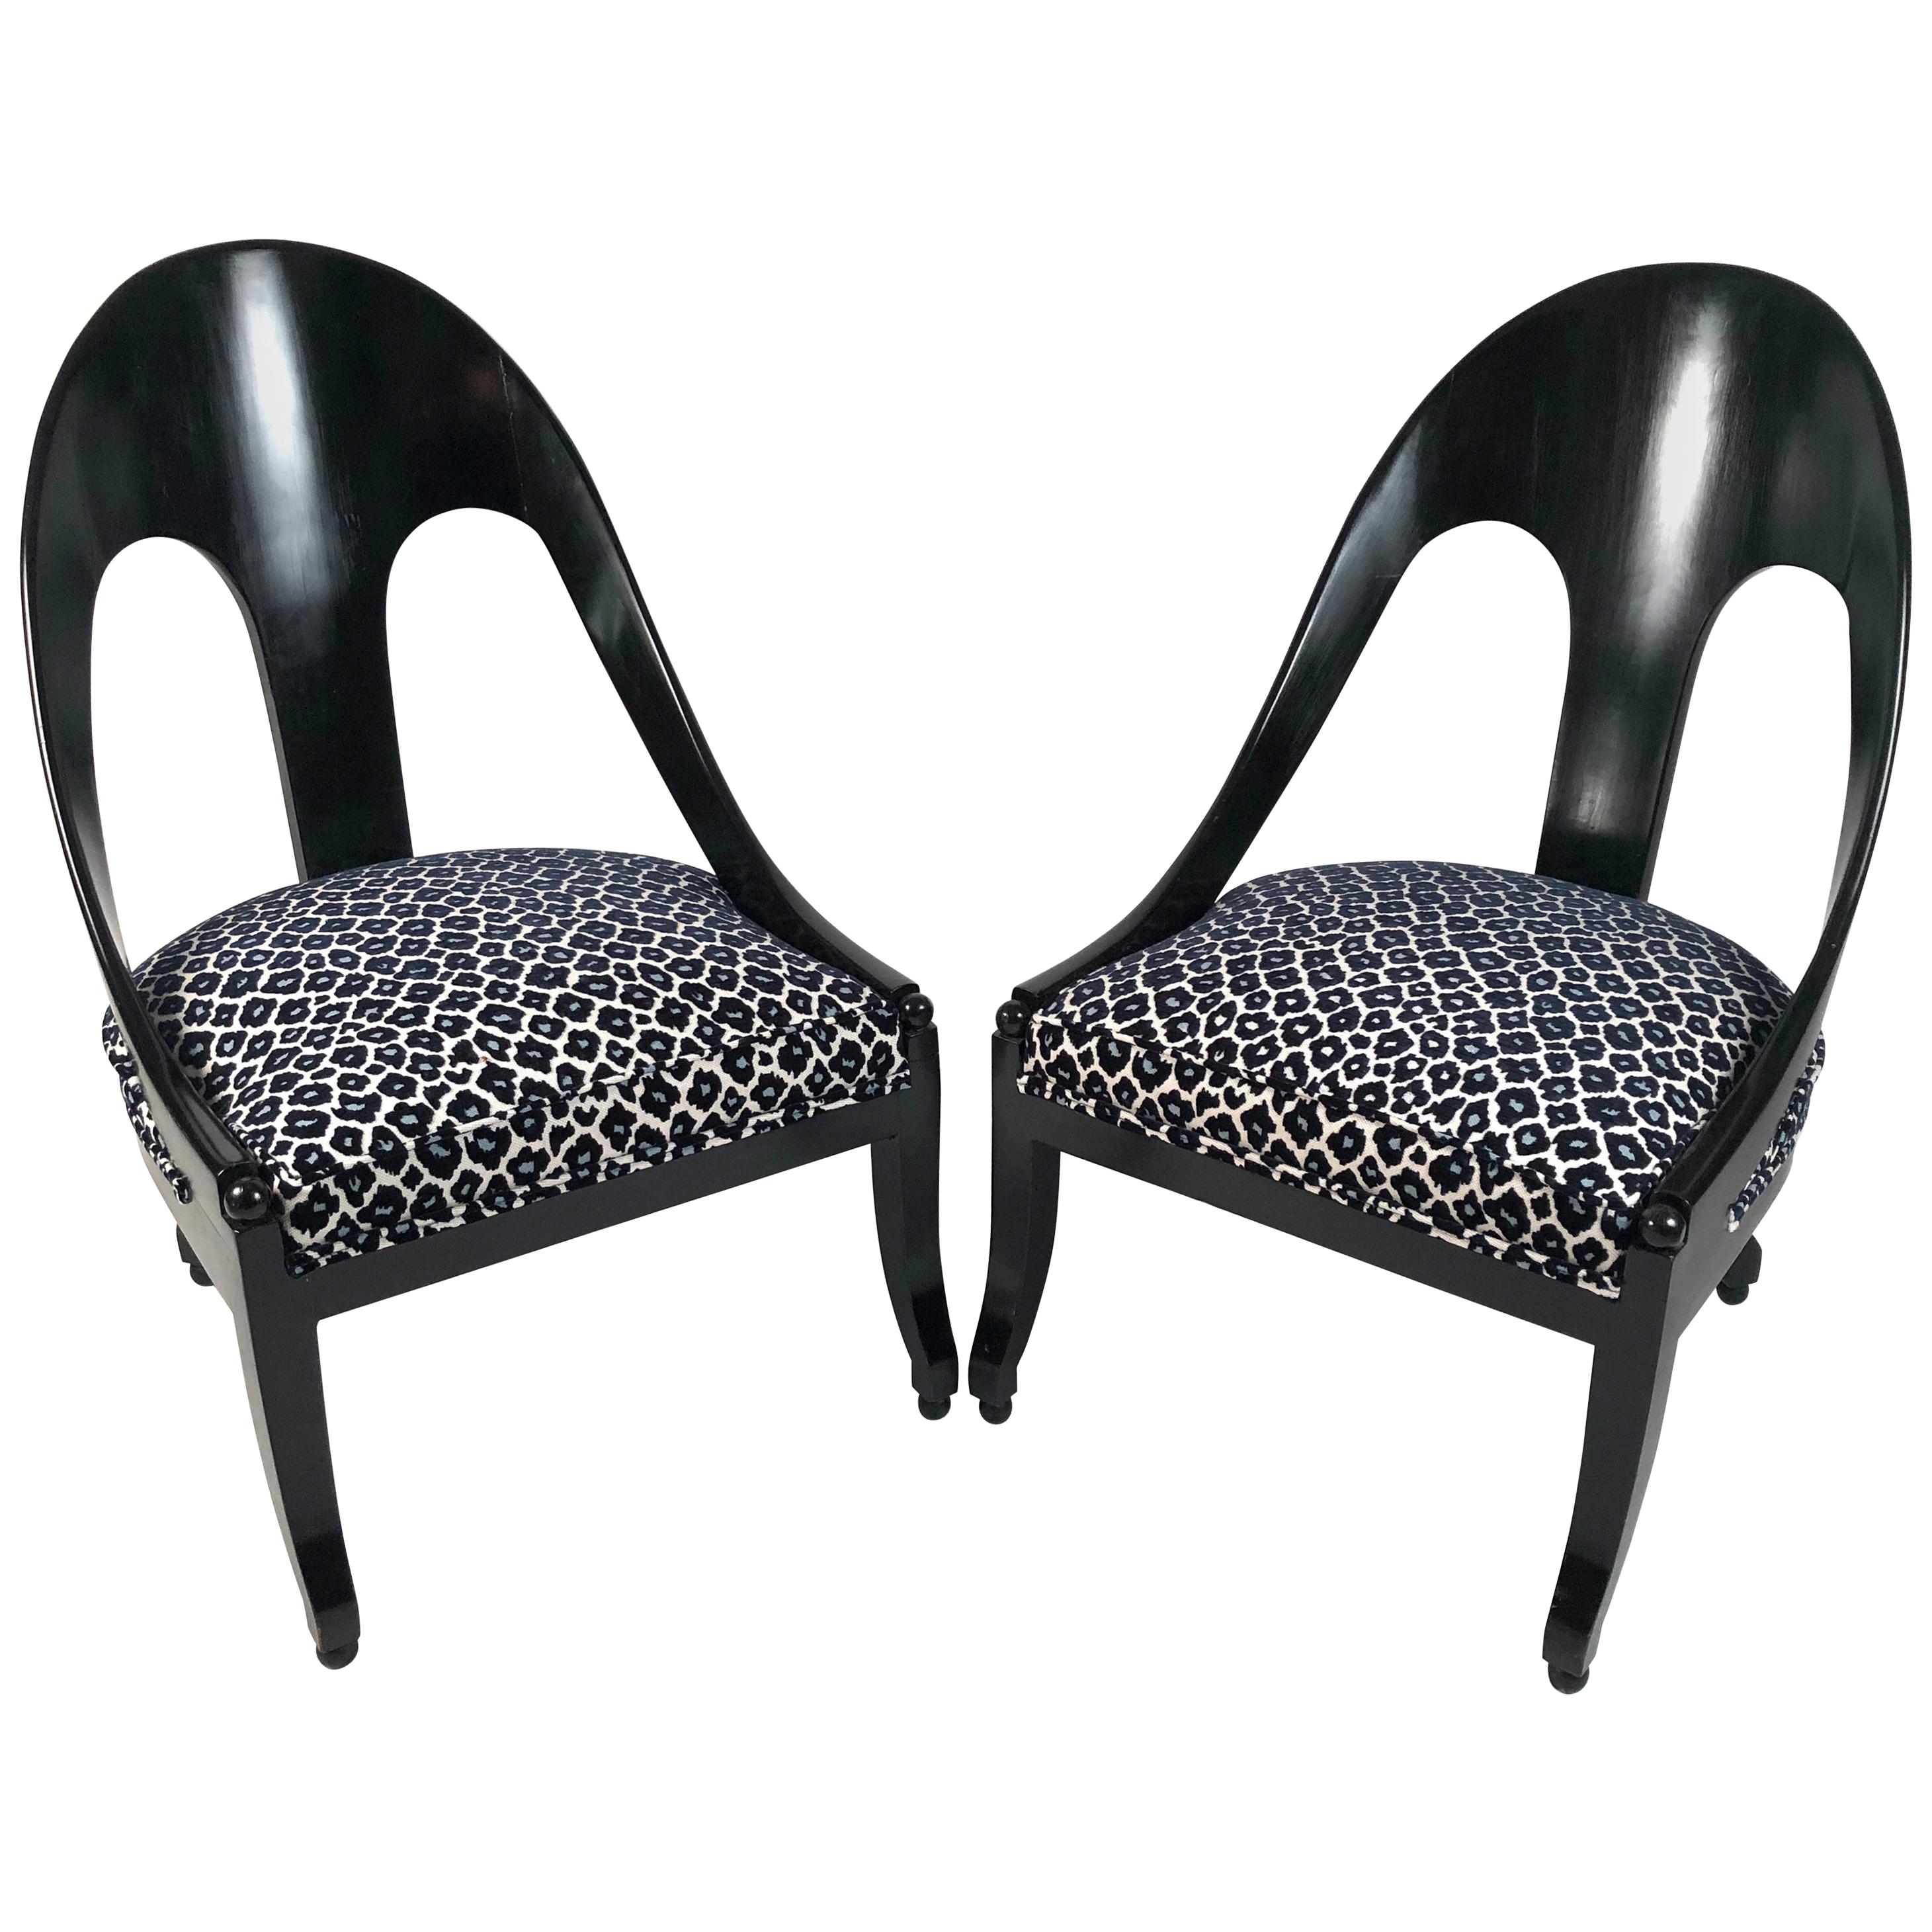 Pair of Vintage Black Hollywood Regency Style Spoon Back Chairs